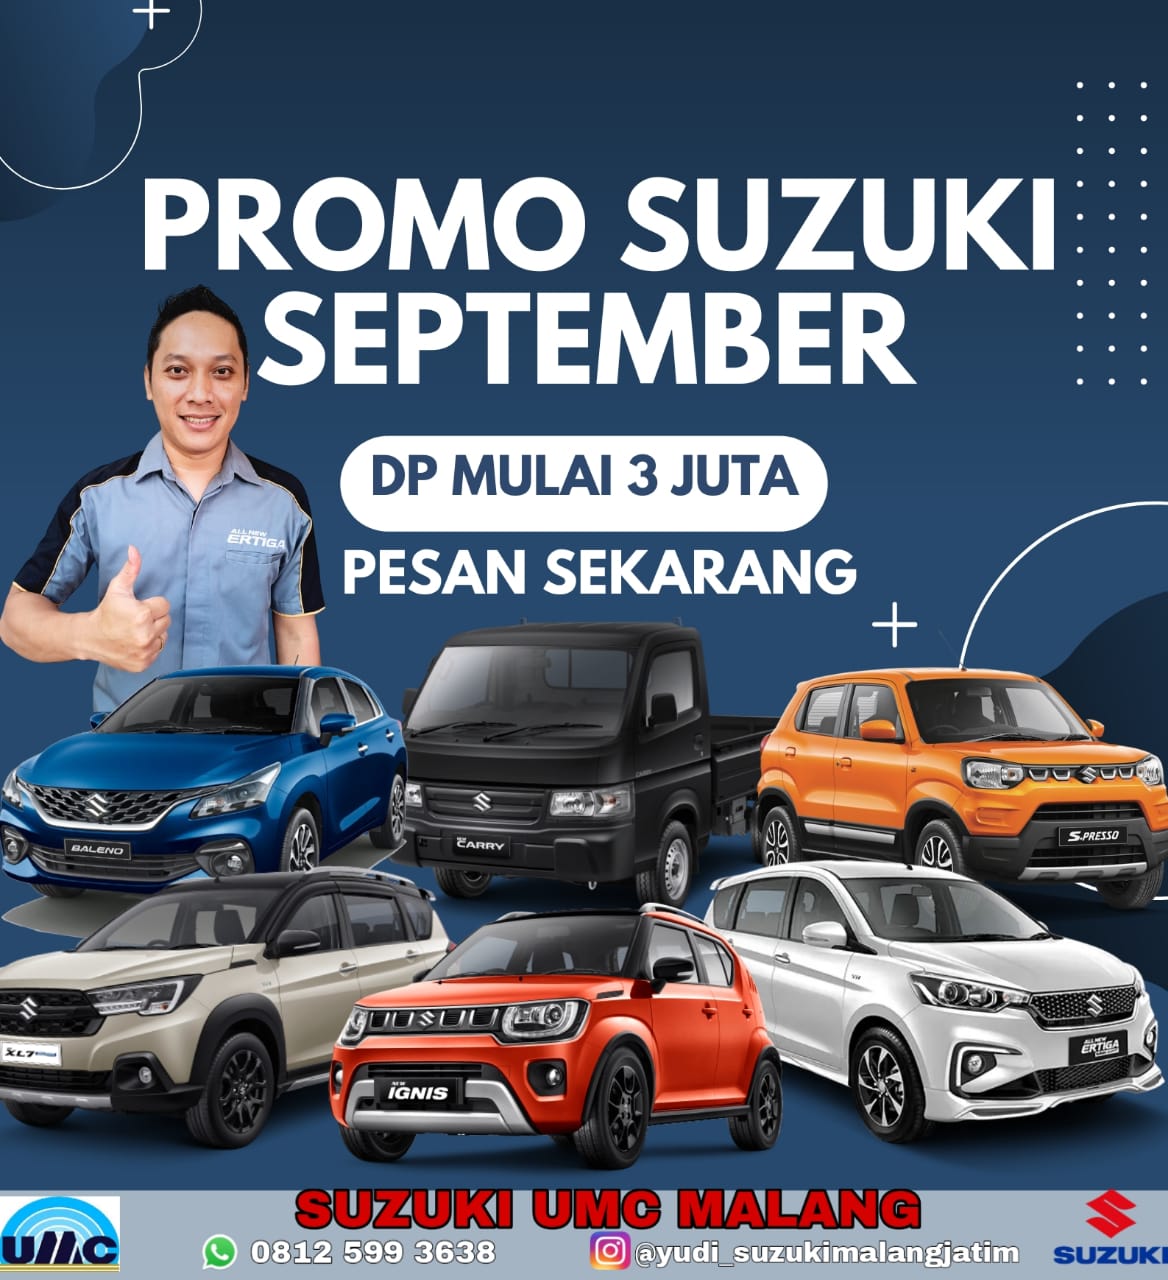 Promo Suzuki Malang